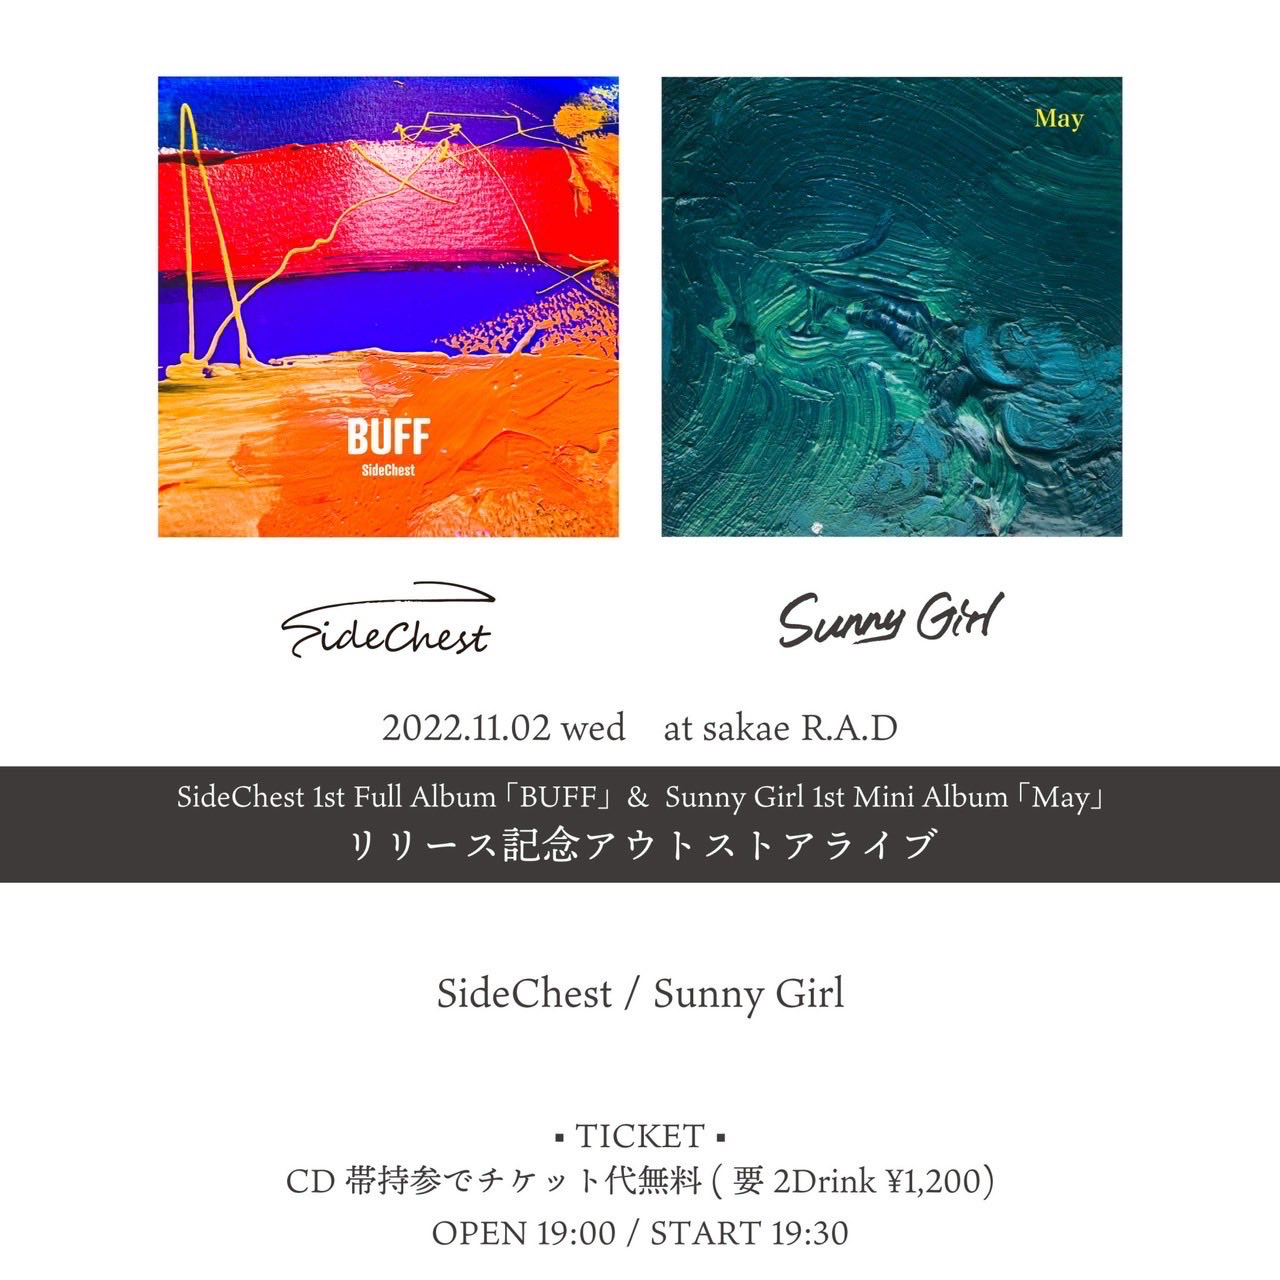 SideChest 1st full album「BUFF」 Sunny Girl 1st mini album“May” リリース記念アウトストアライブ